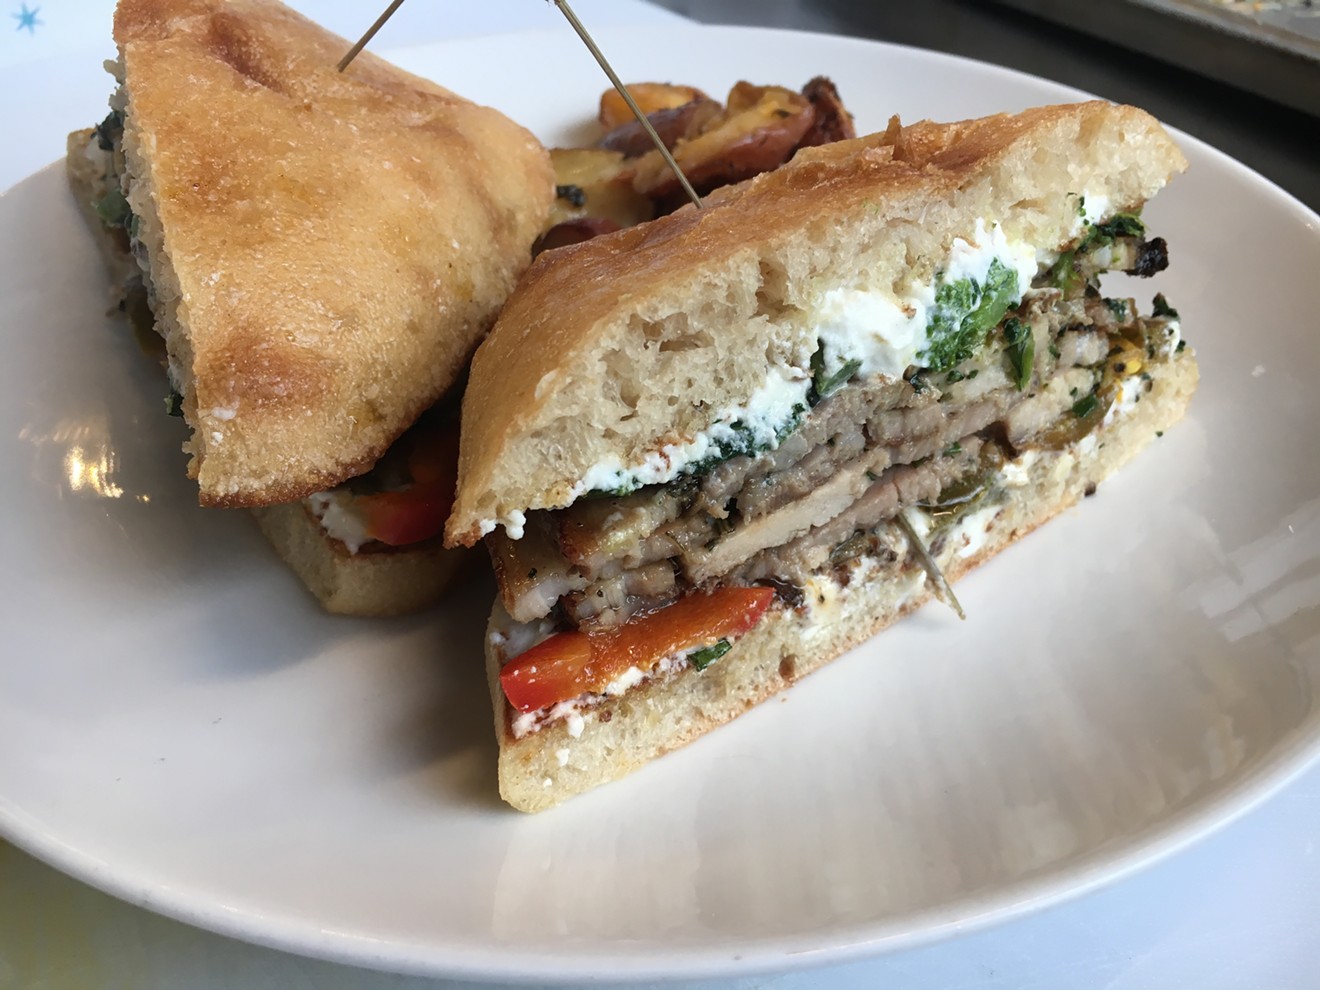 The East Coast porchetta sandwich is a pork lover's dream at SK Provisions.